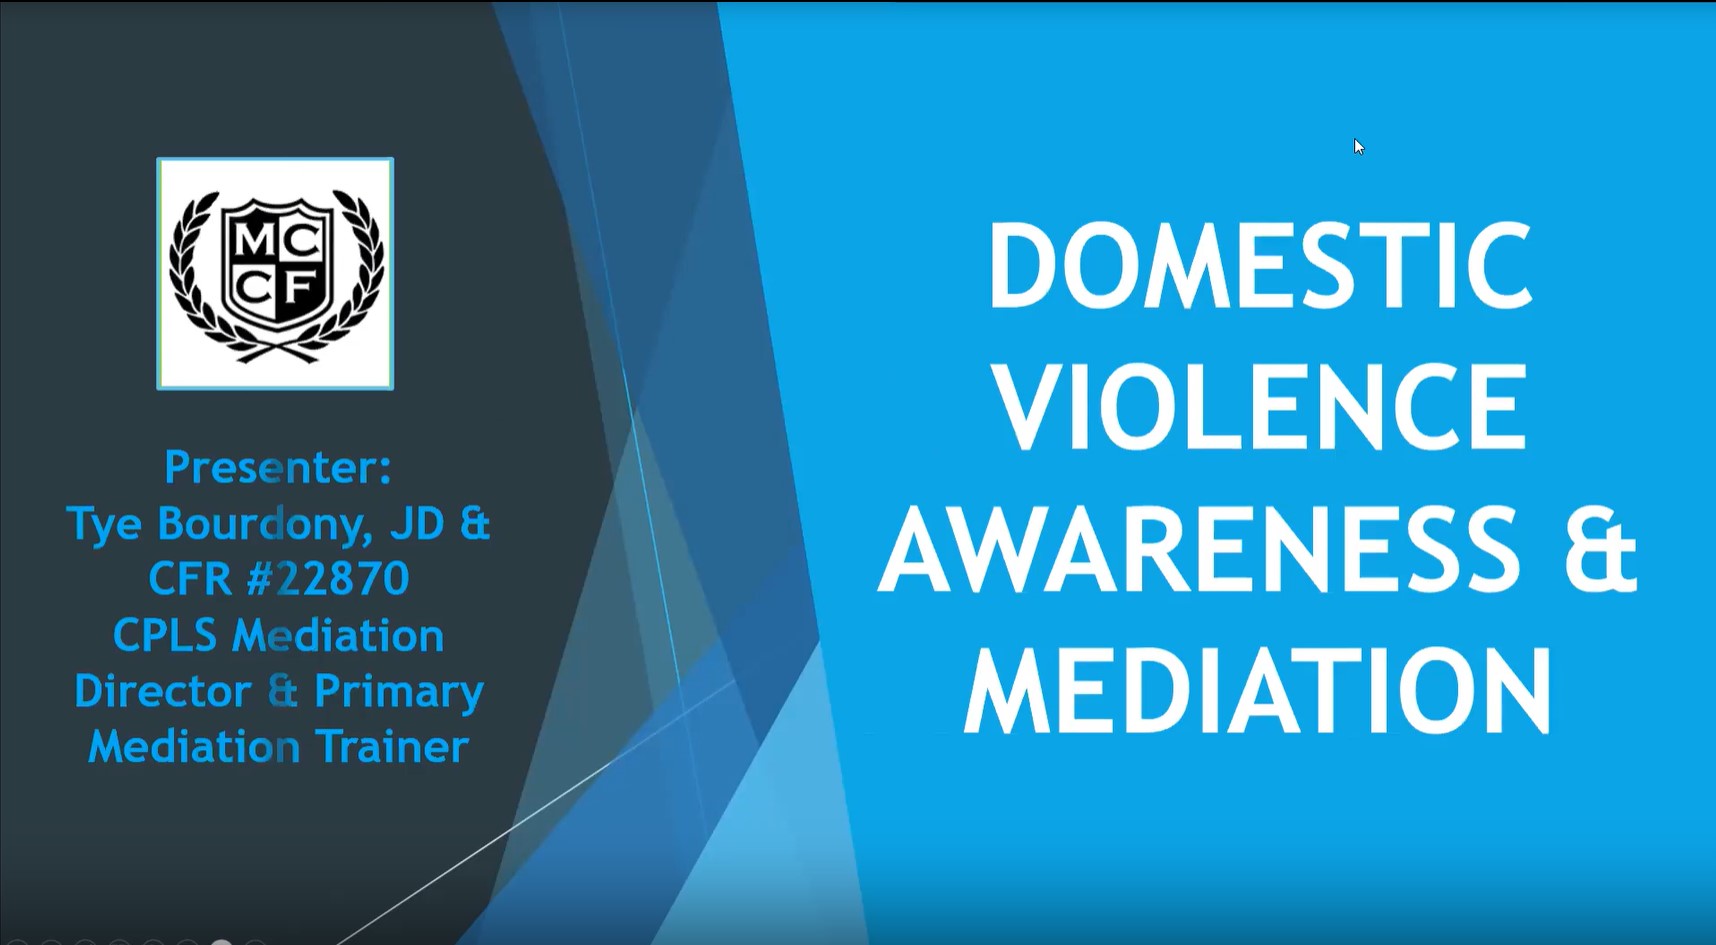 PREMIUM Domestic Violence Awareness & Mediation with Tye Bourdony